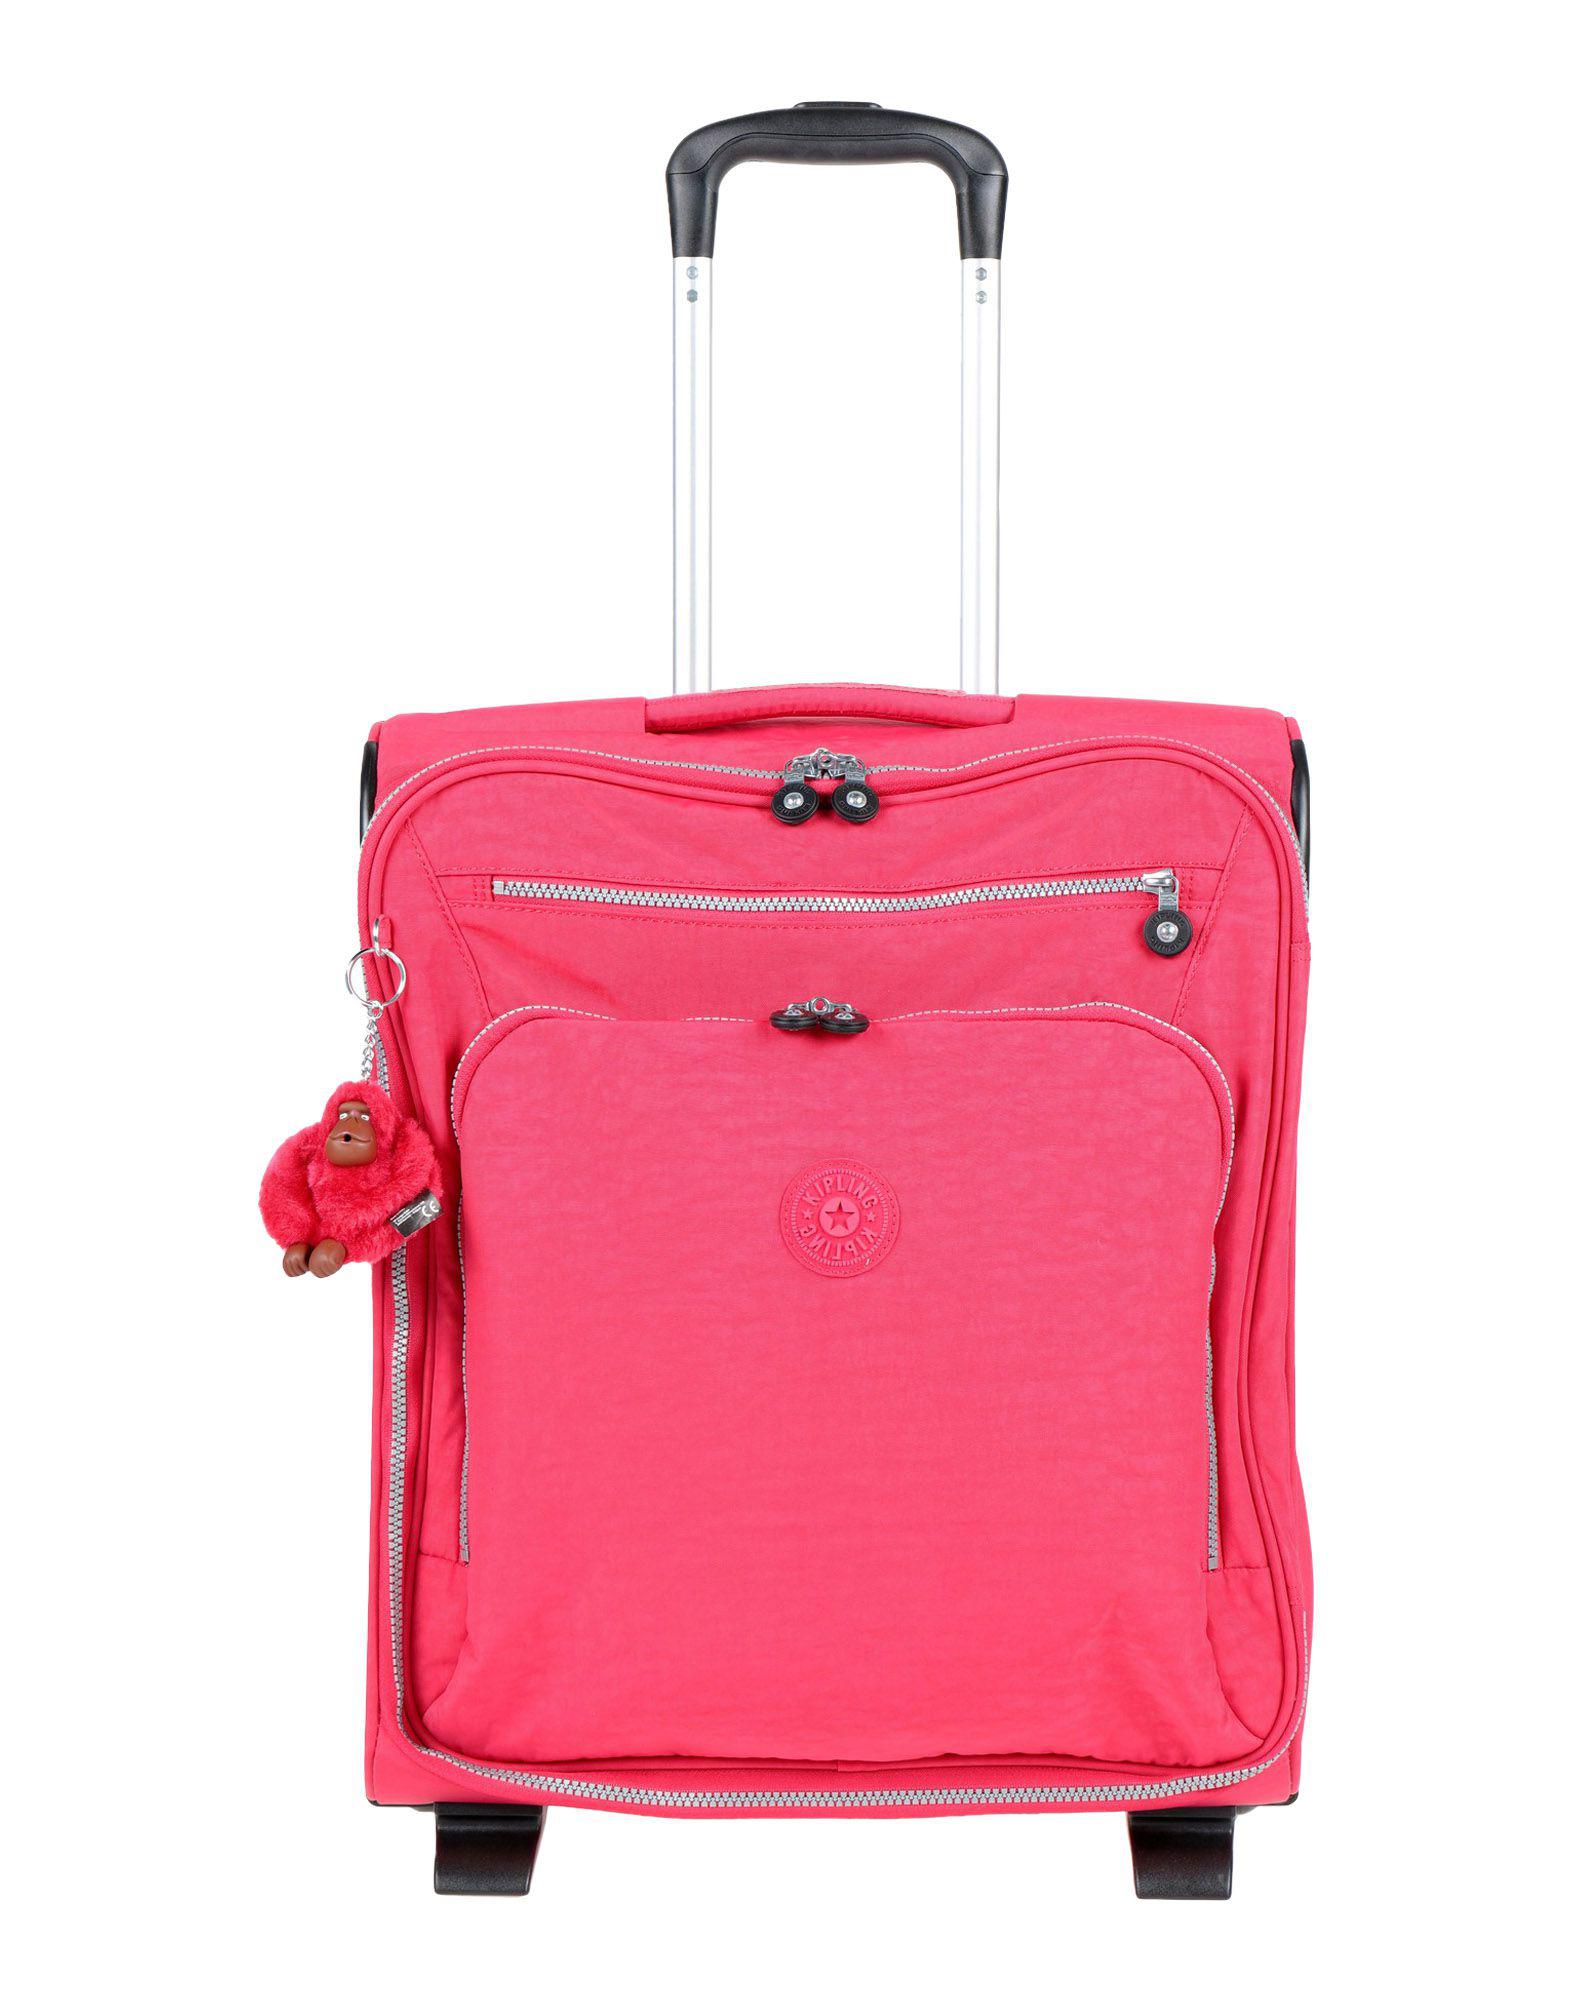 Kipling Canvas Wheeled luggage in Fuchsia (Pink) - Lyst